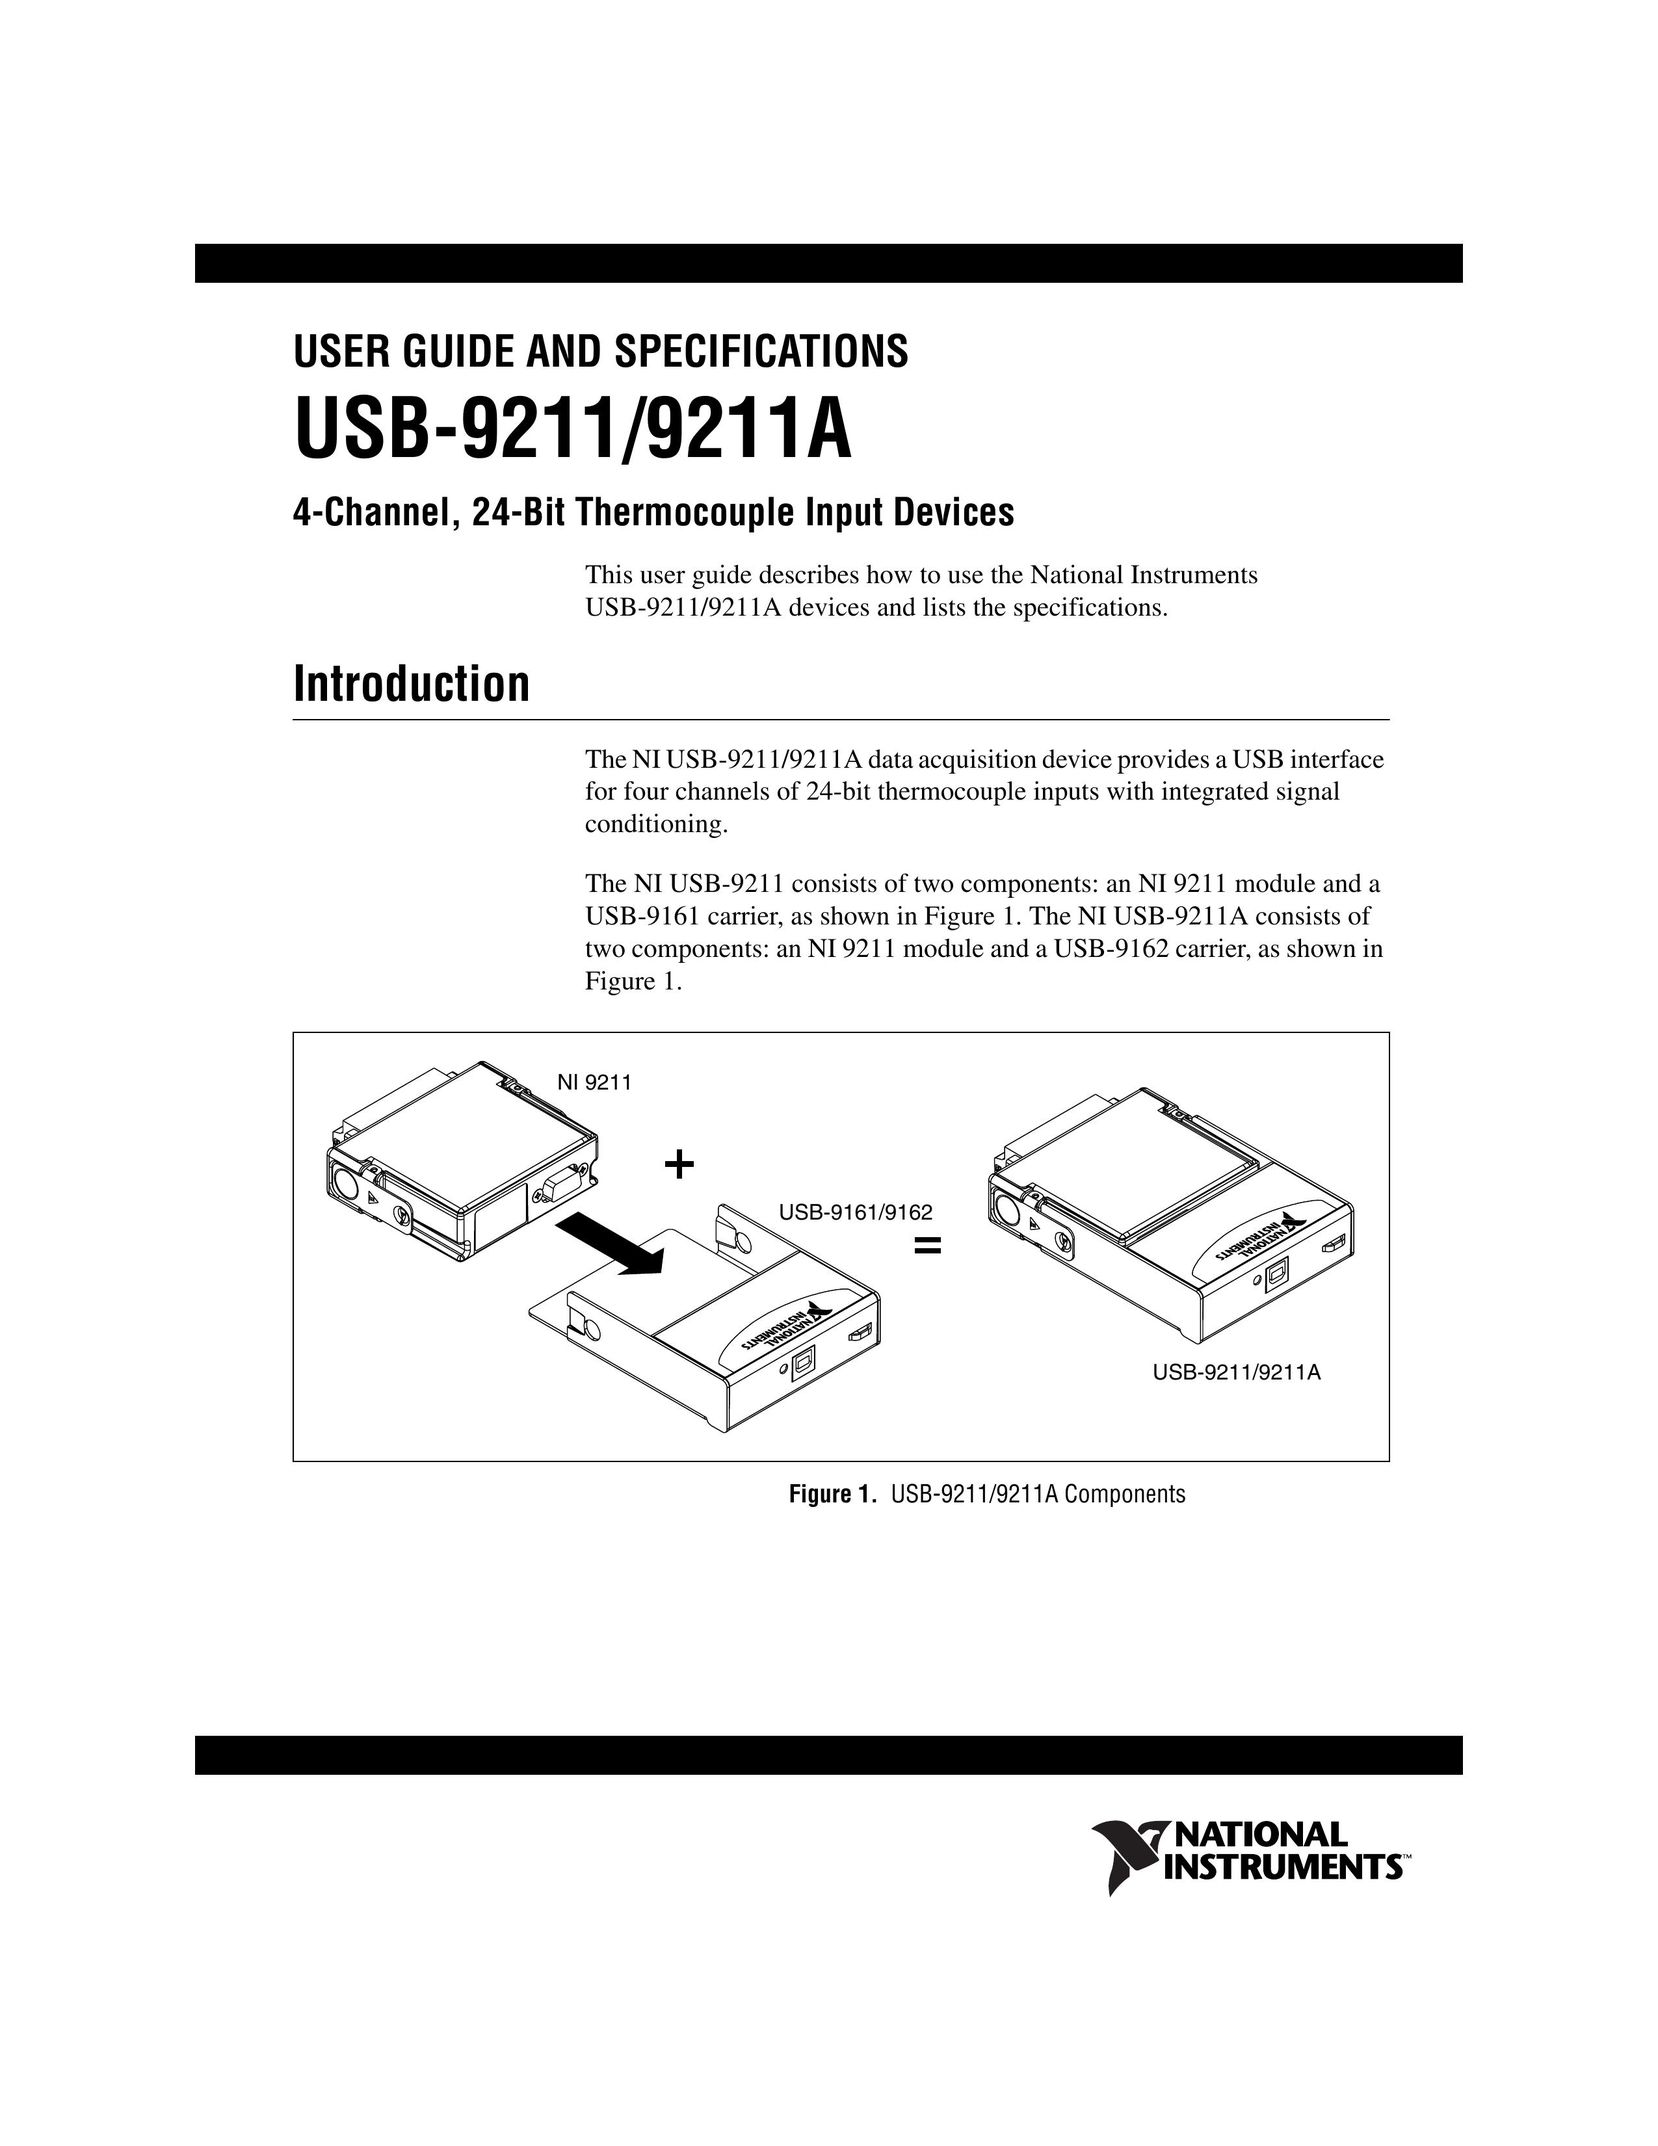 National Instruments 9211 Computer Drive User Manual